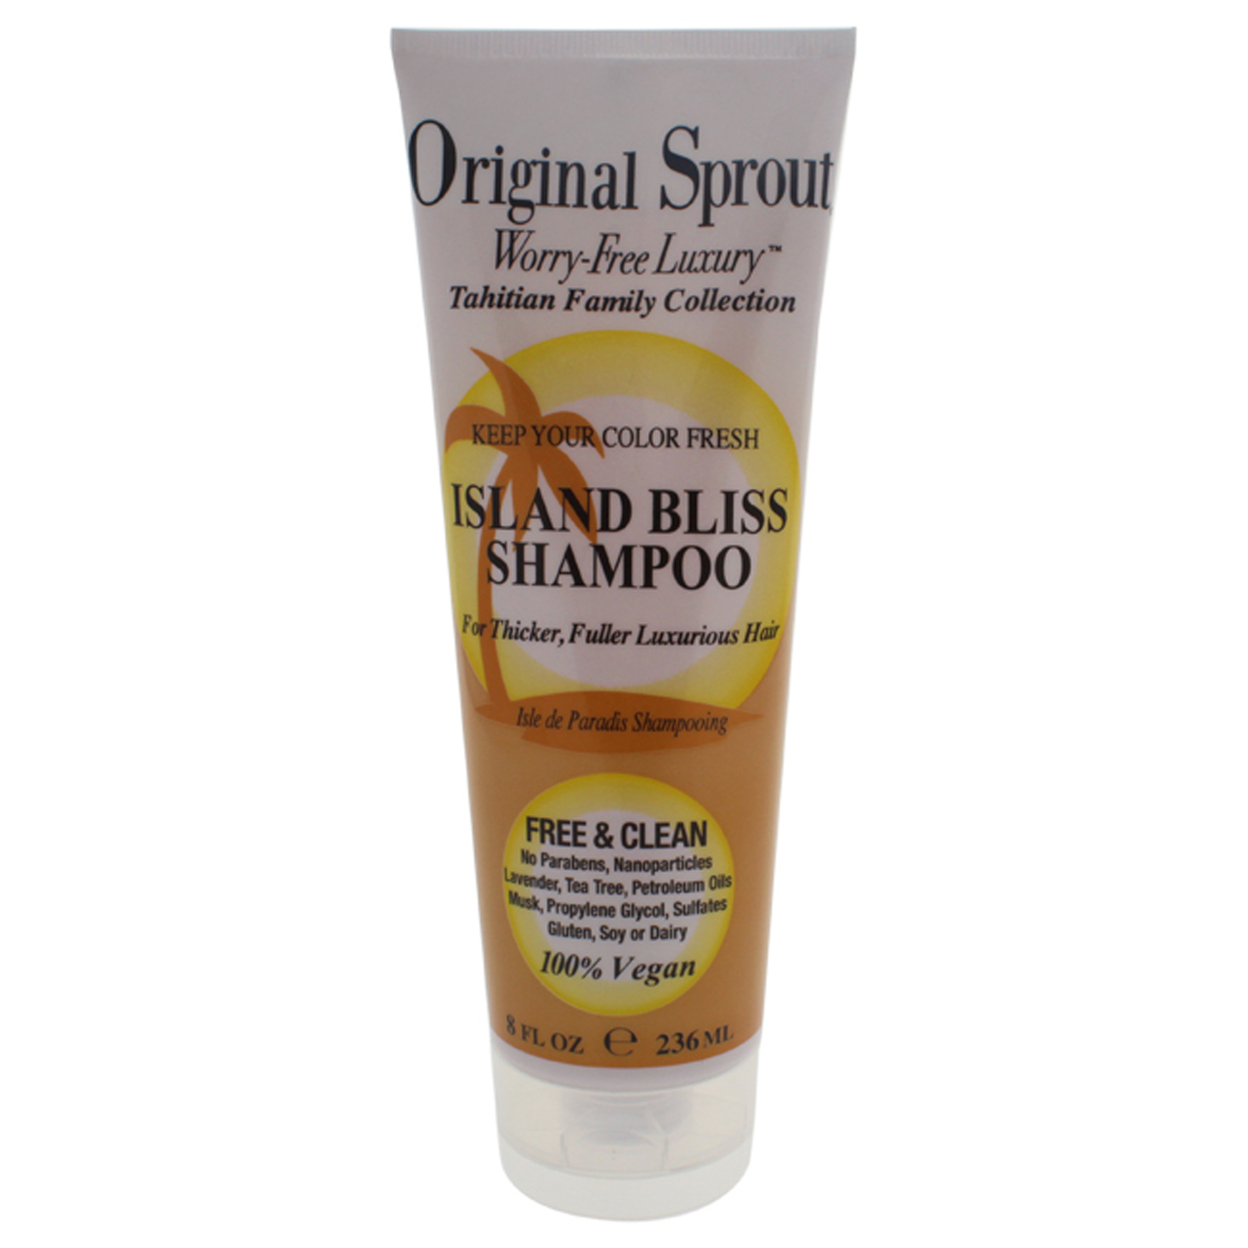 Original Sprout Island Bliss Shampoo 8 Oz